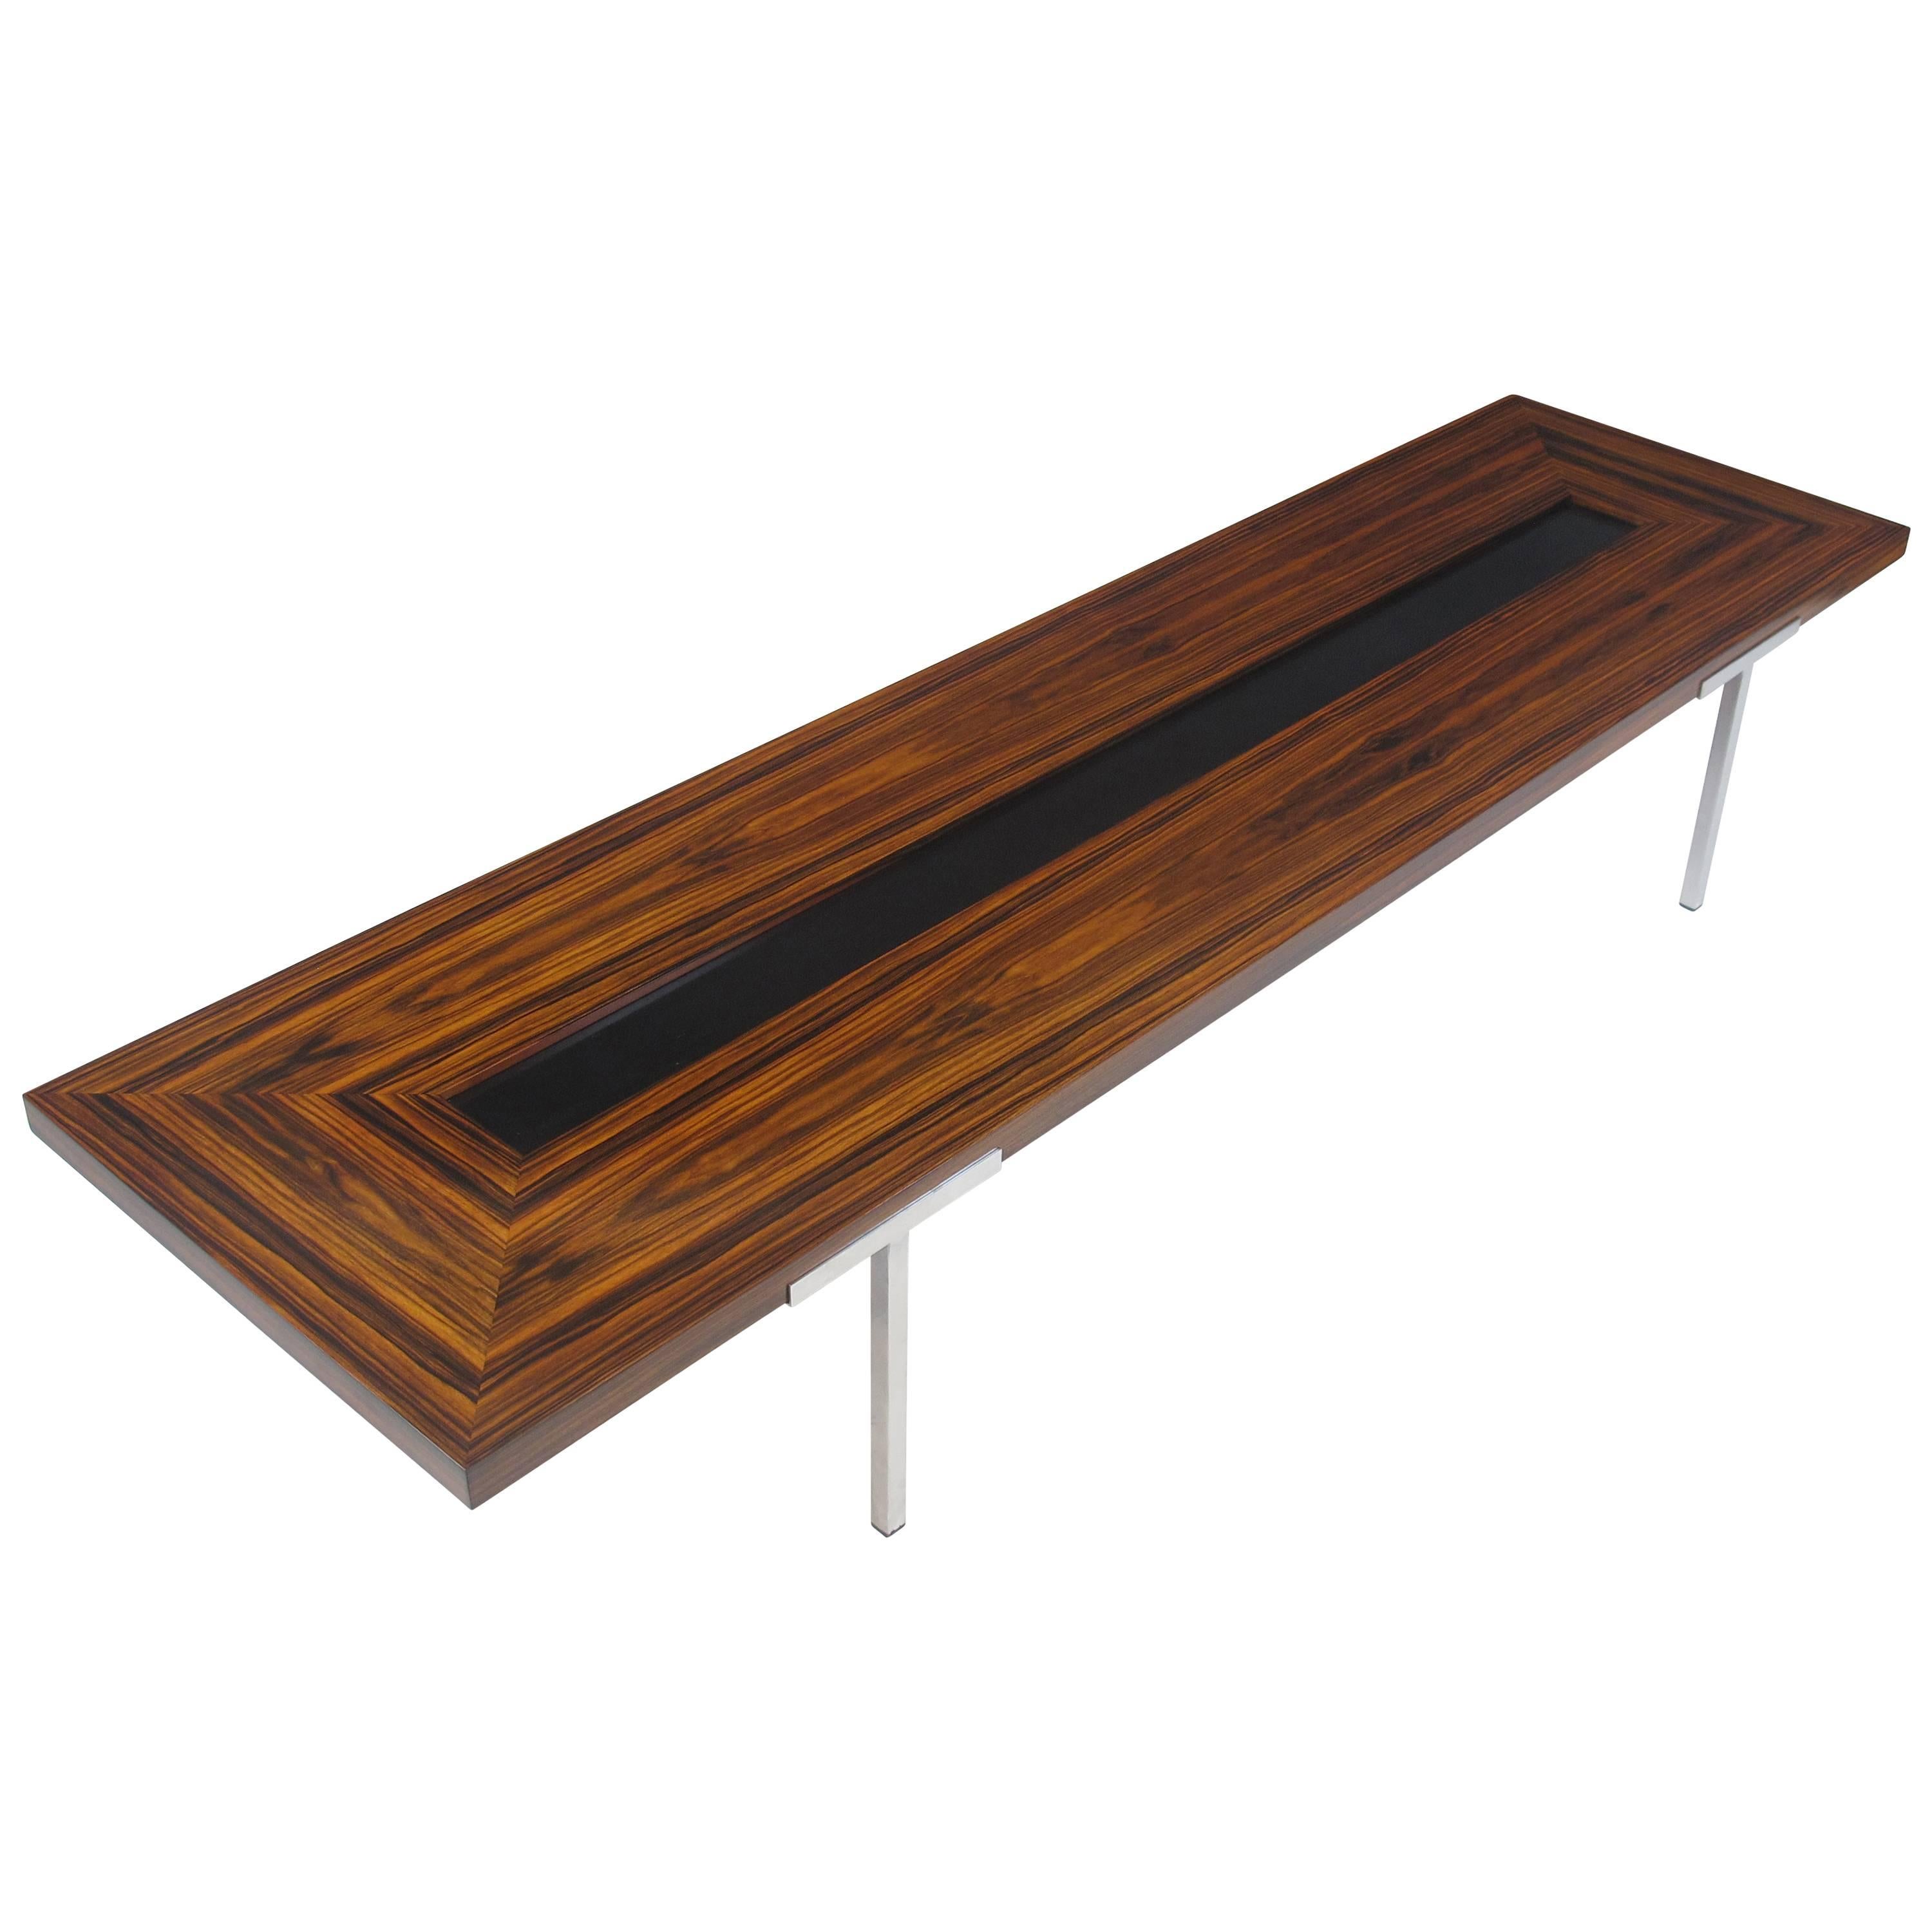 Large 8' Santos Rosewood Coffee Table on Steel Legs